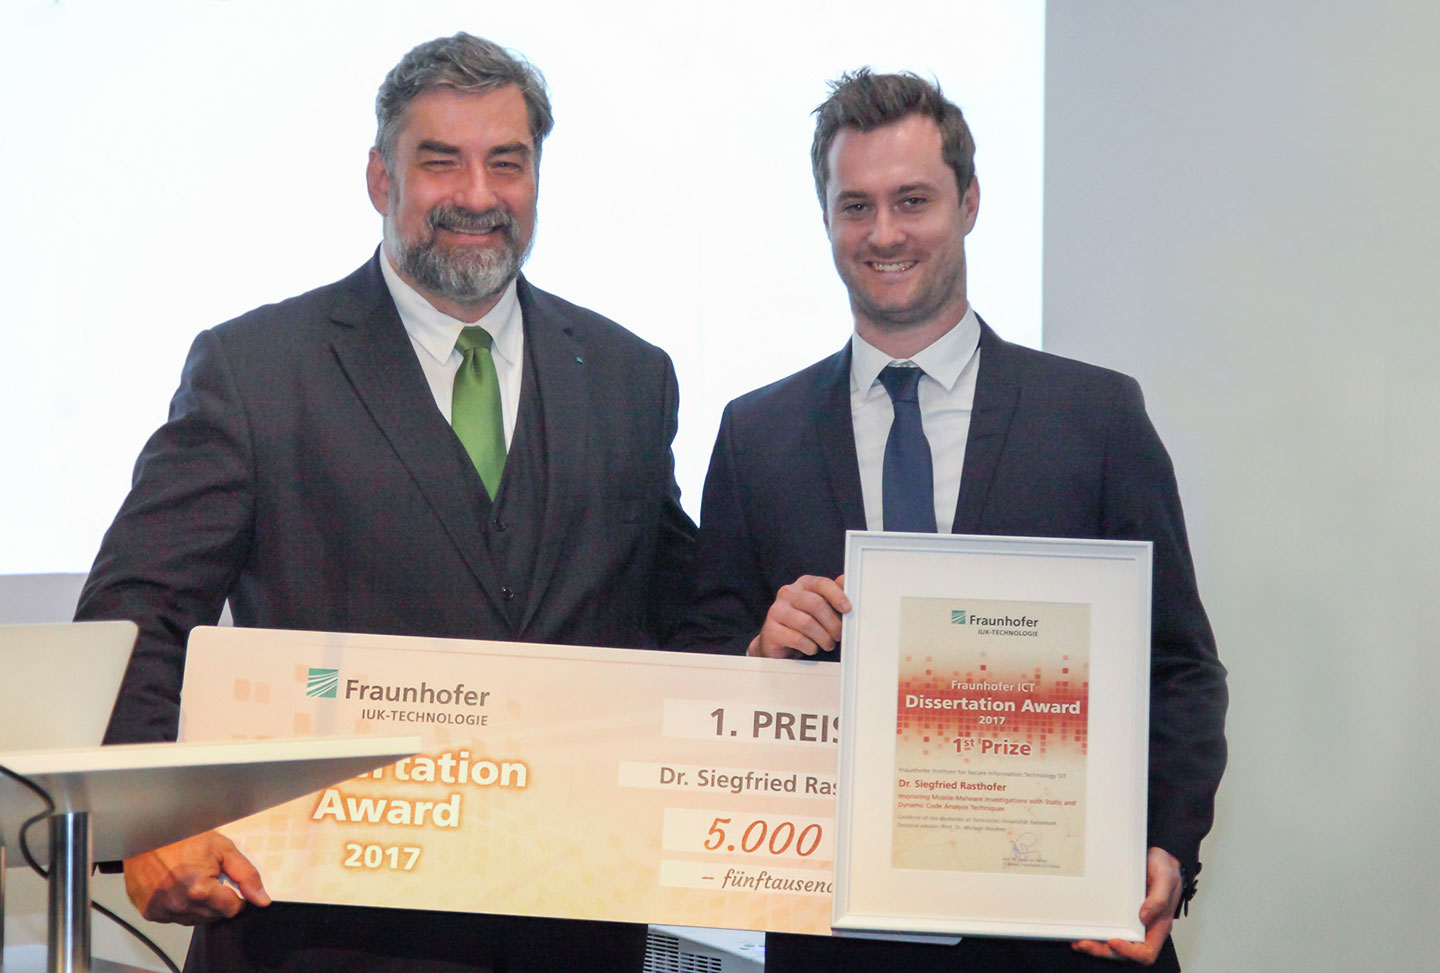 Fraunhofer ICT Dissertation Award